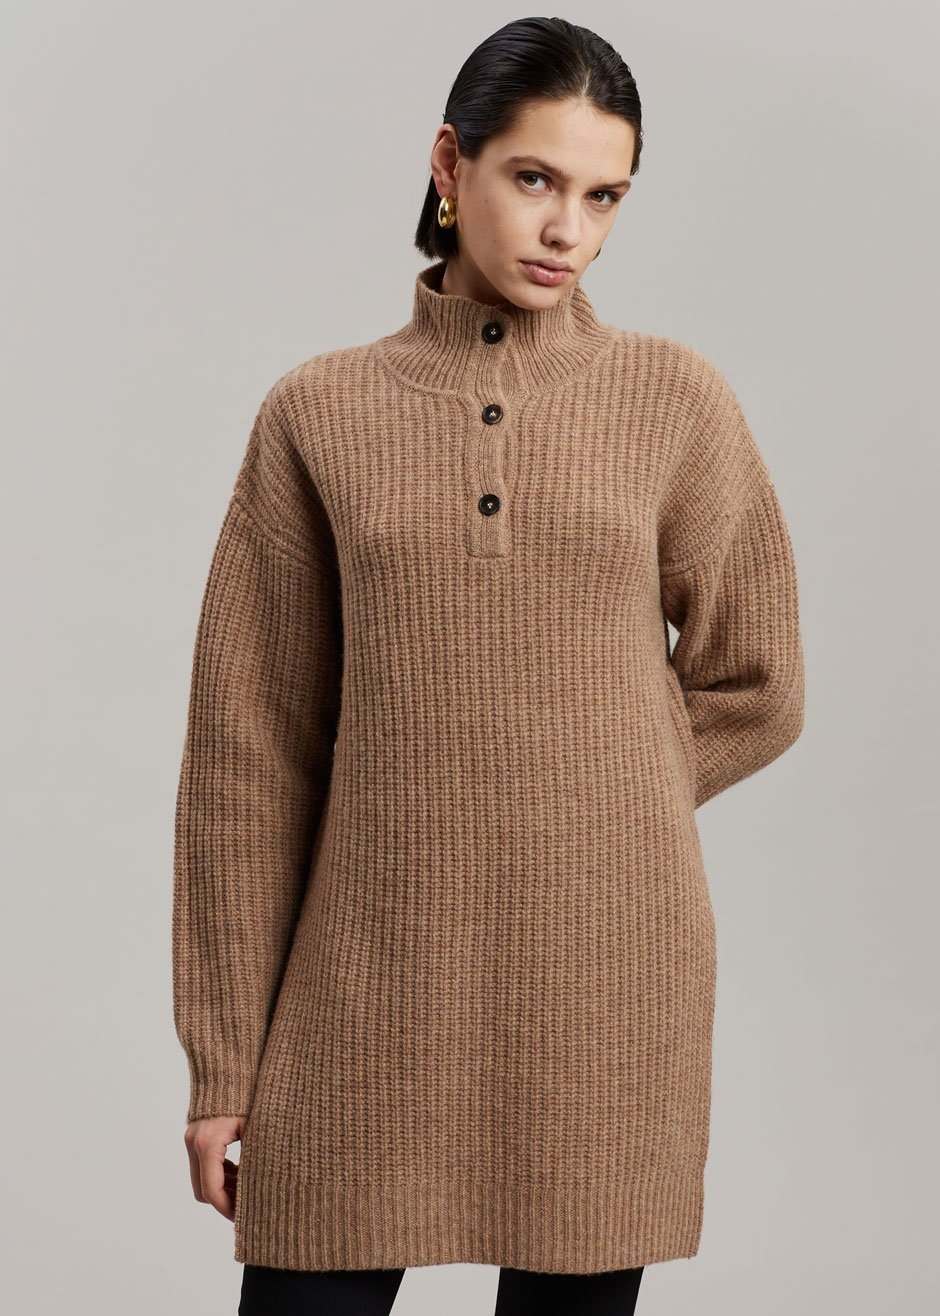 The Garment Canada Sweater Dress - Light Brown